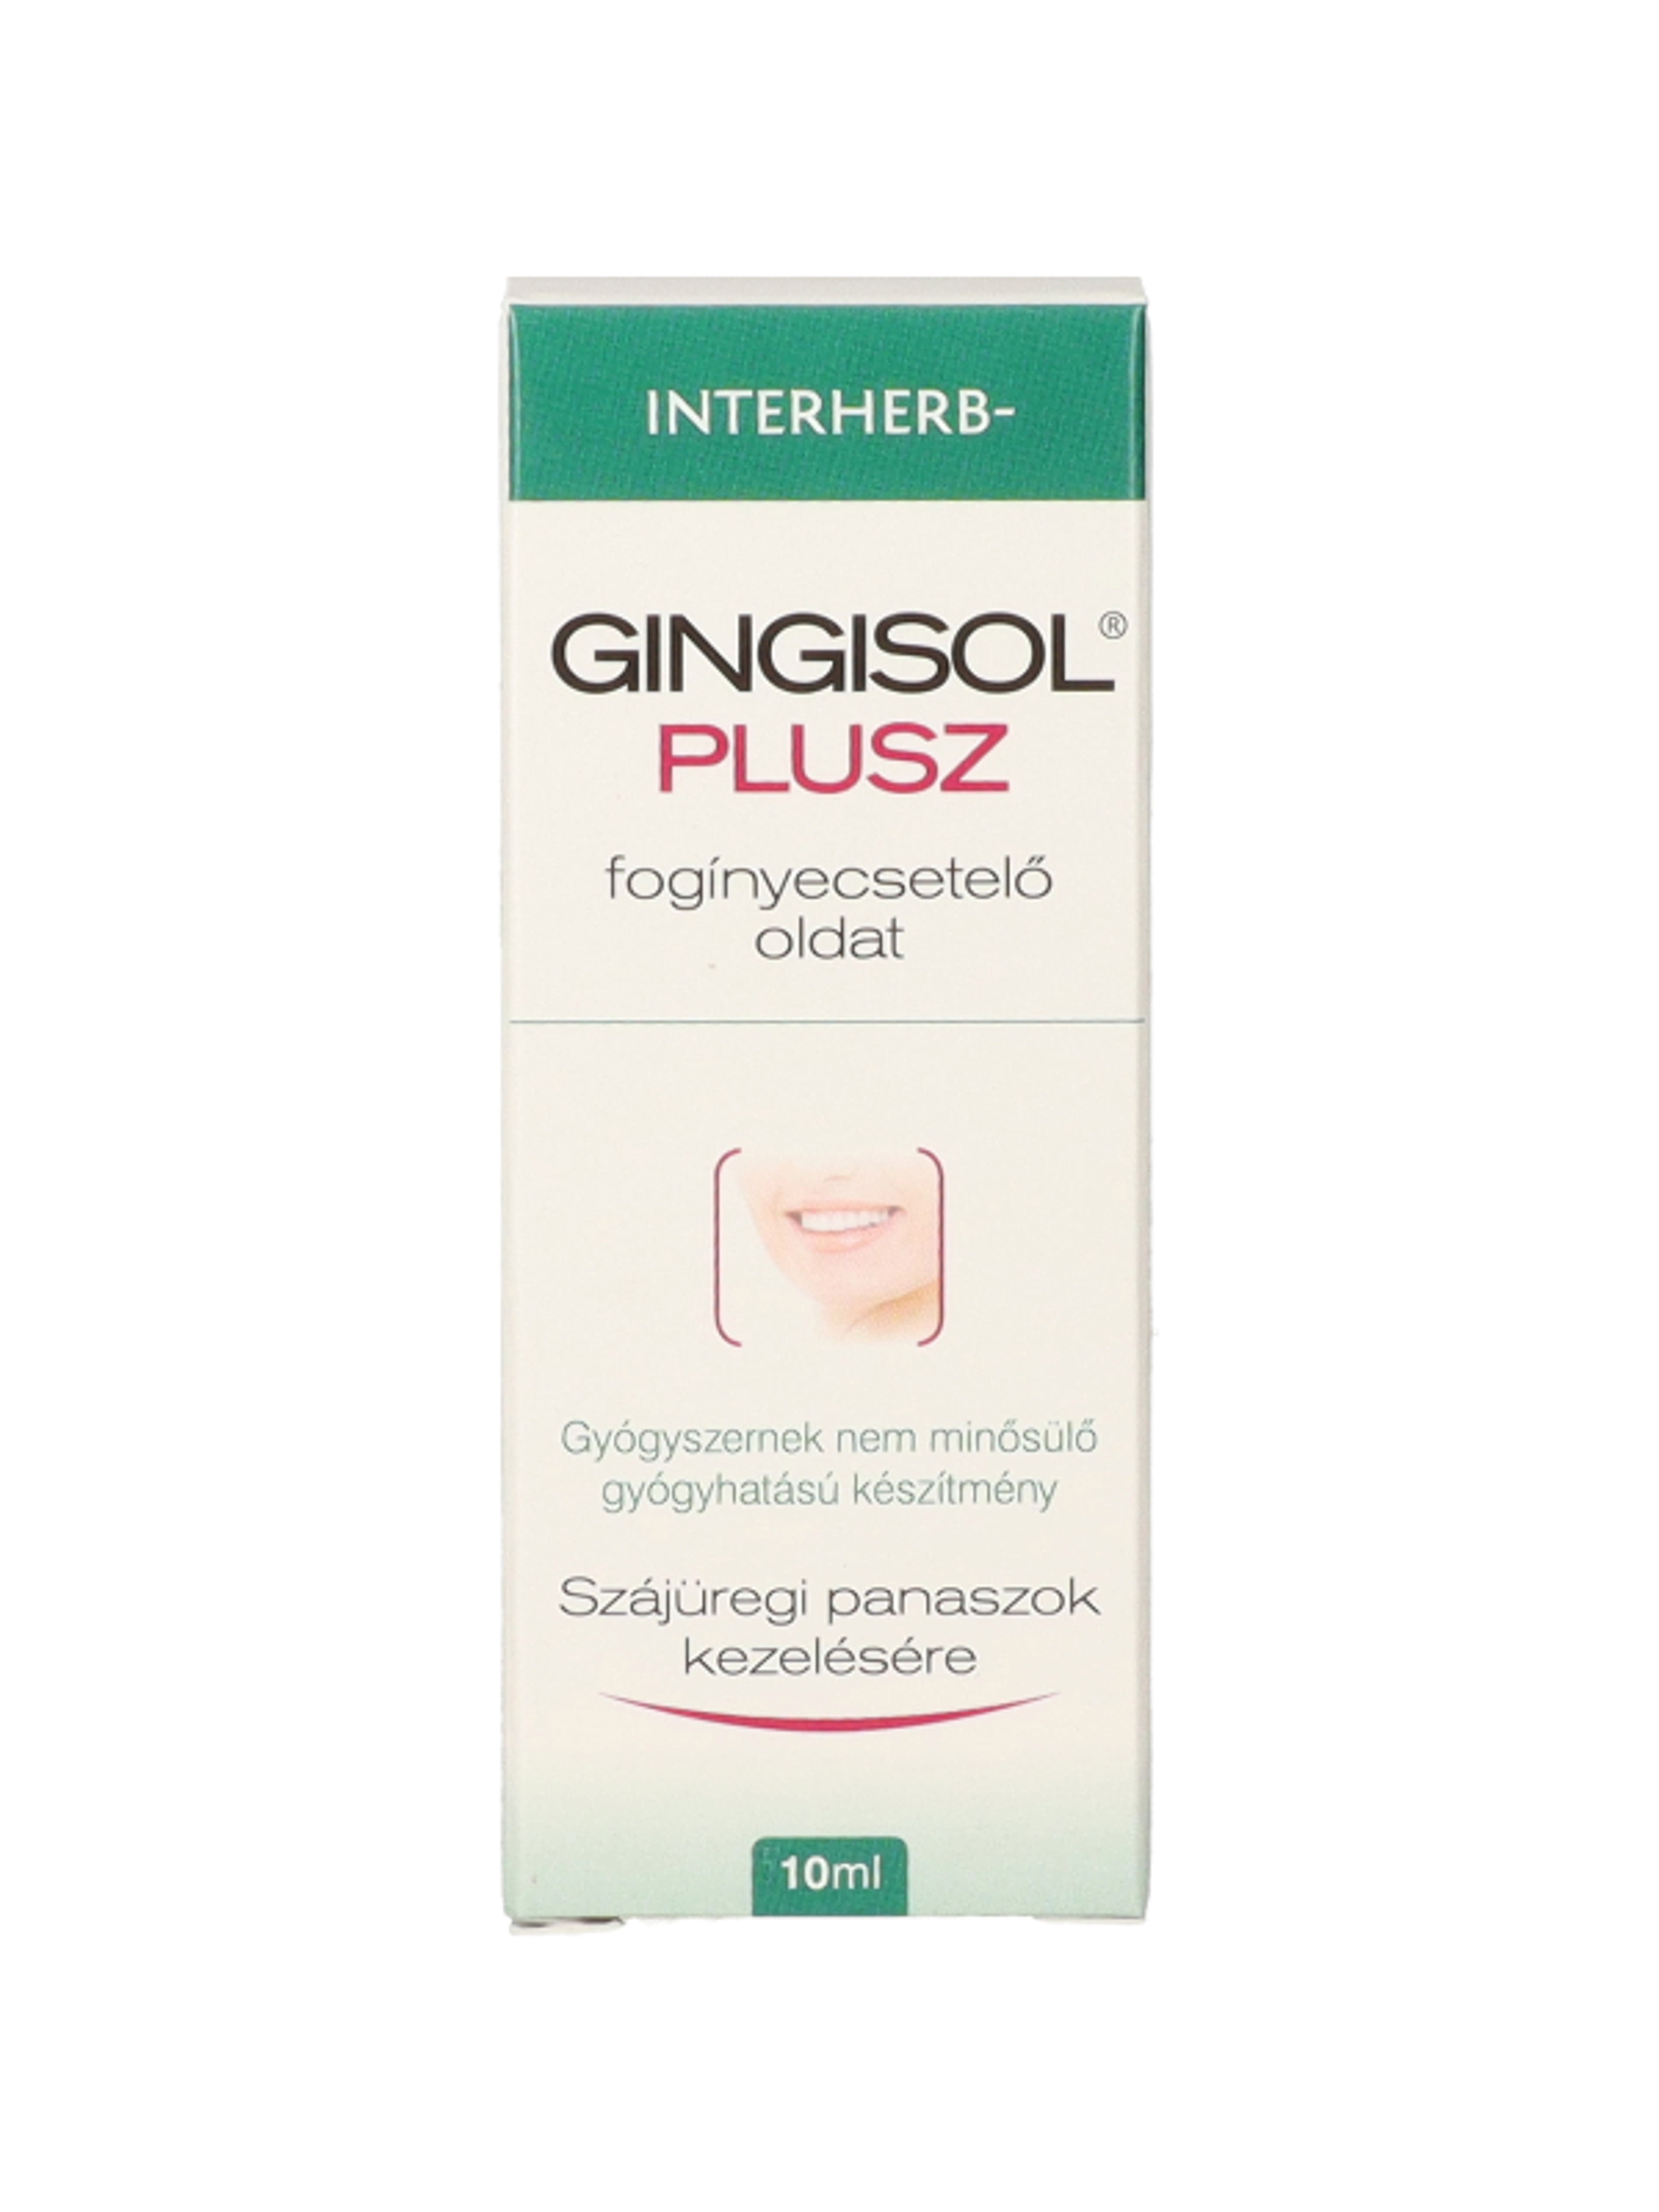 Interherb Gingisol Plus fogínyecsetelo oldat - 10 ml